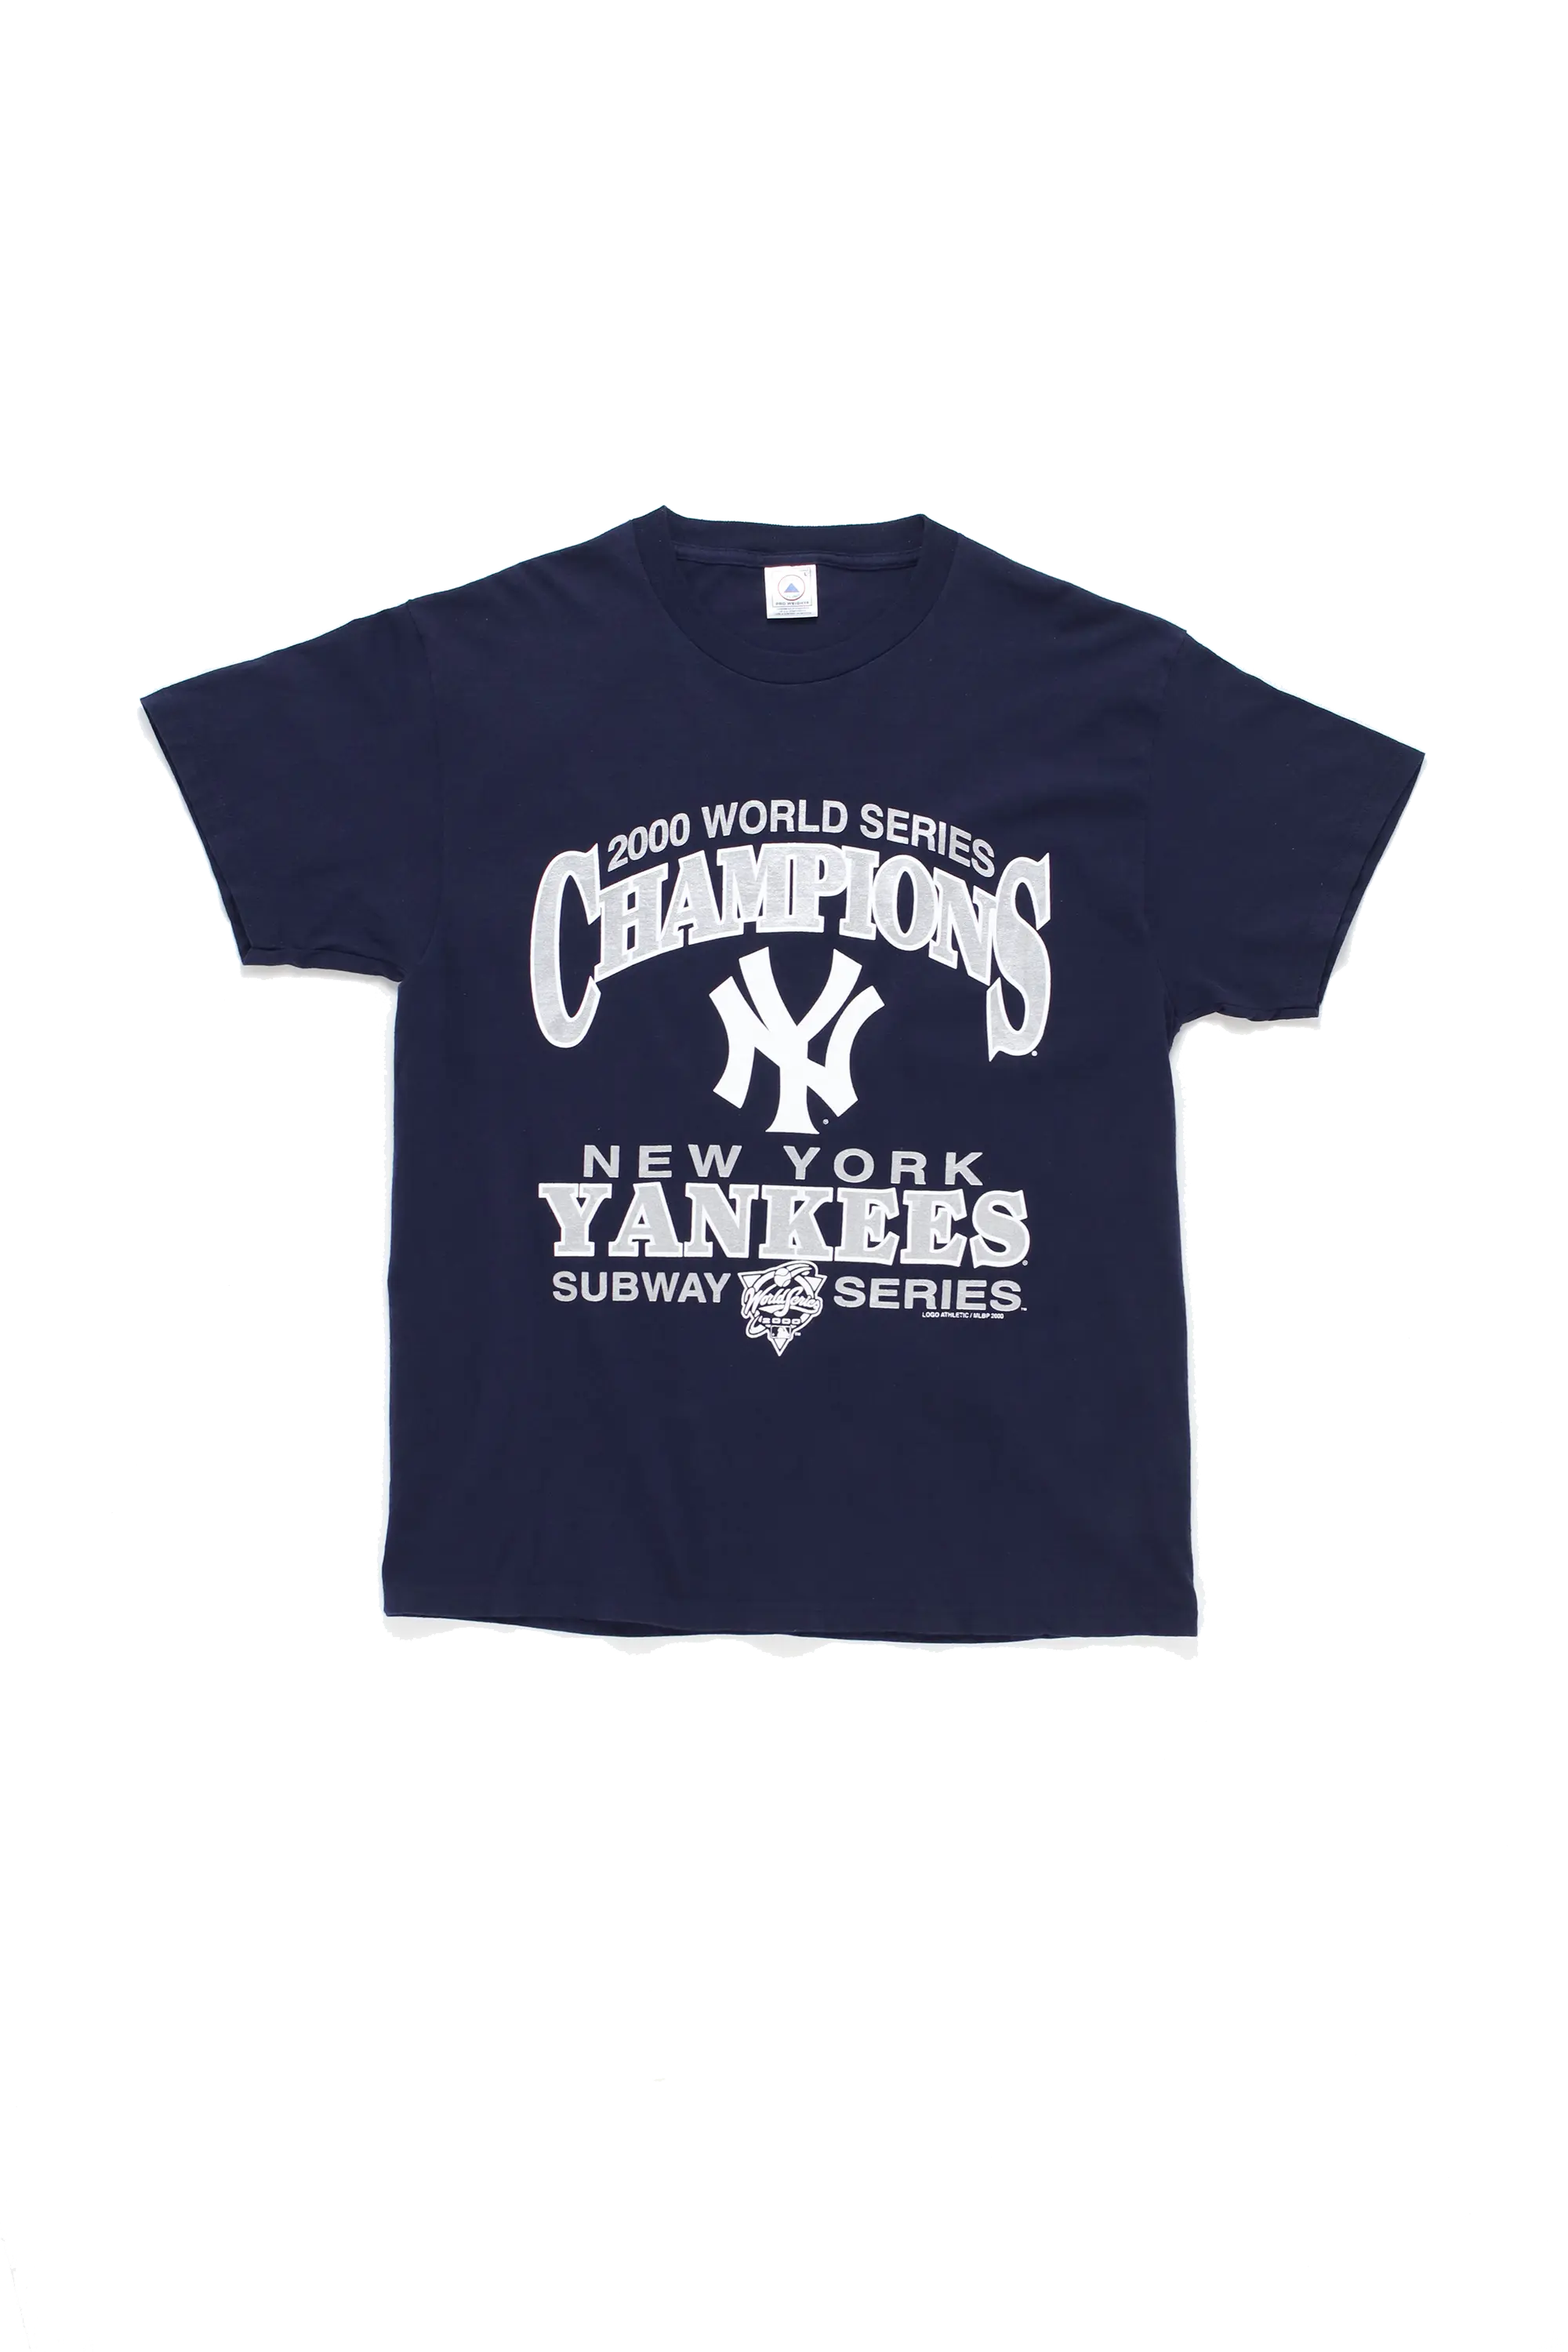 Yankees '00 Championship T.